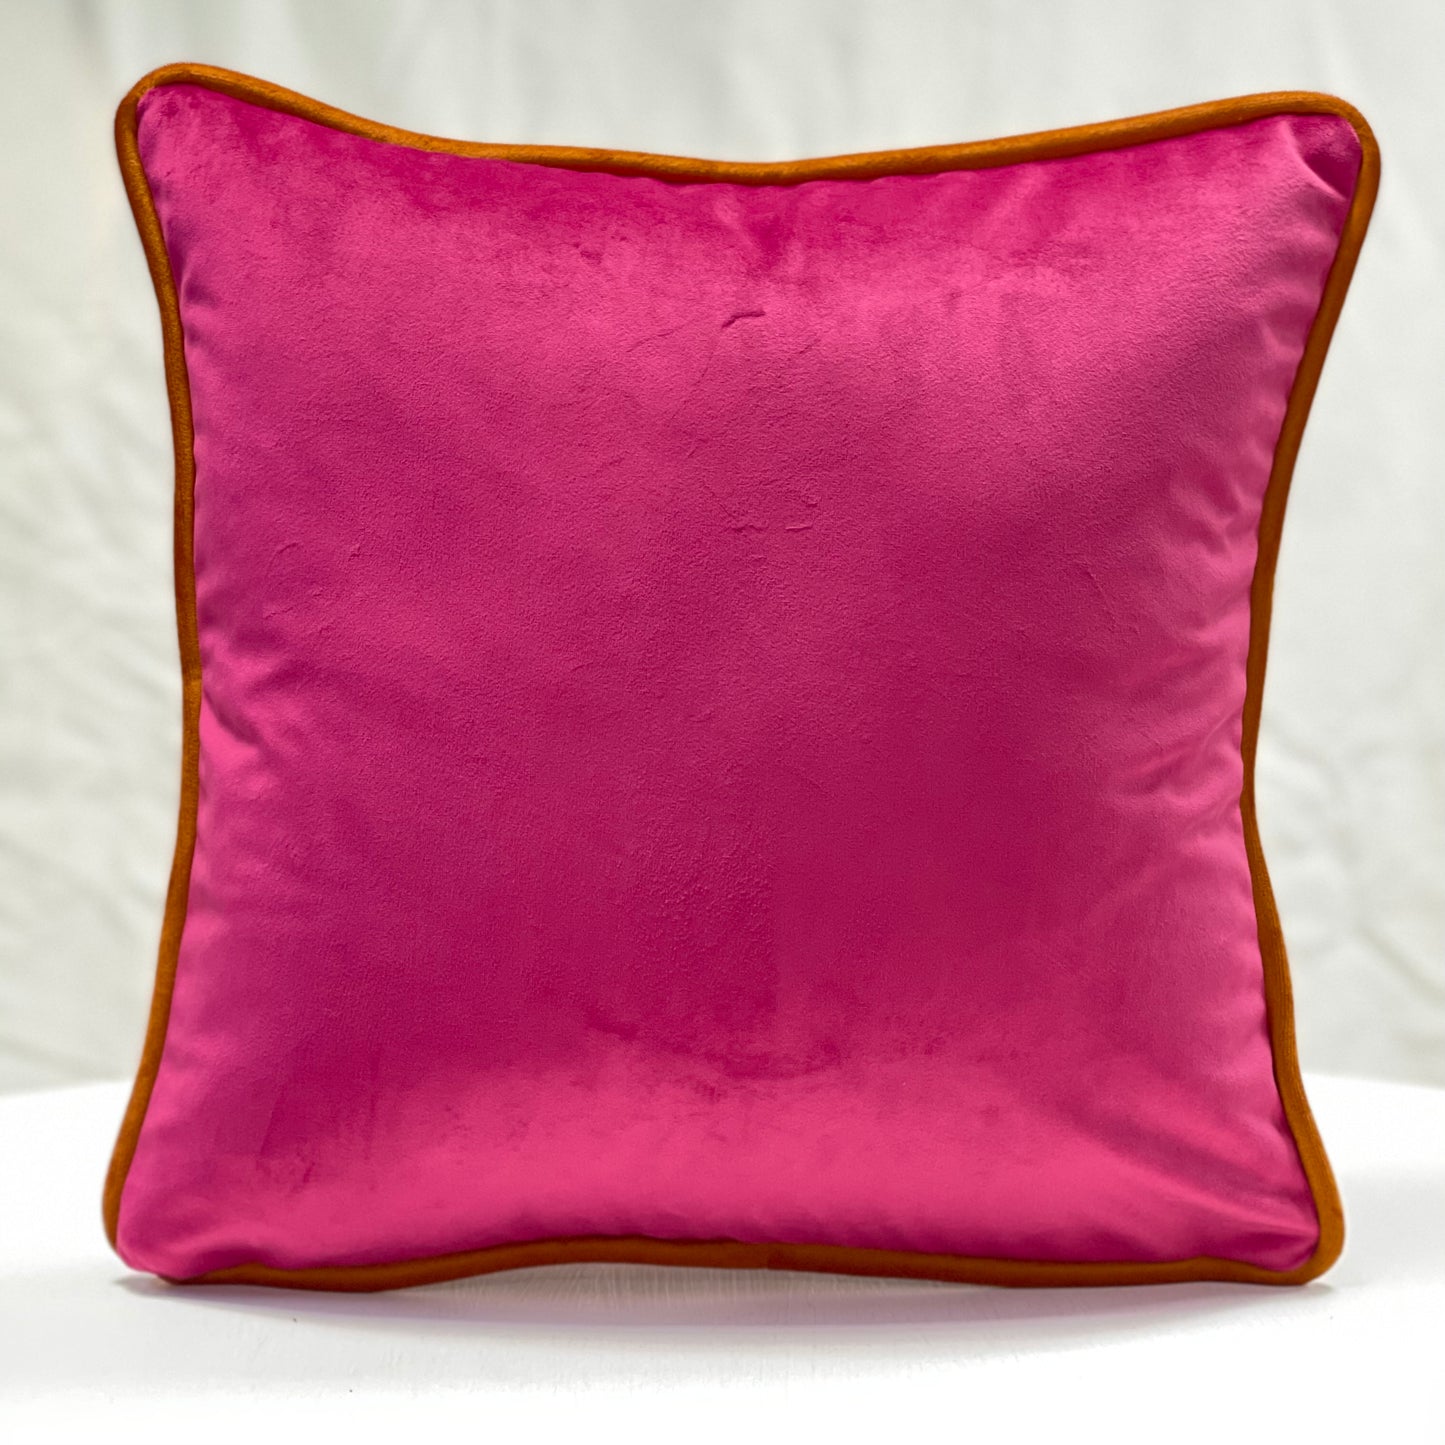 Fuchsia pink velvet piped cushion